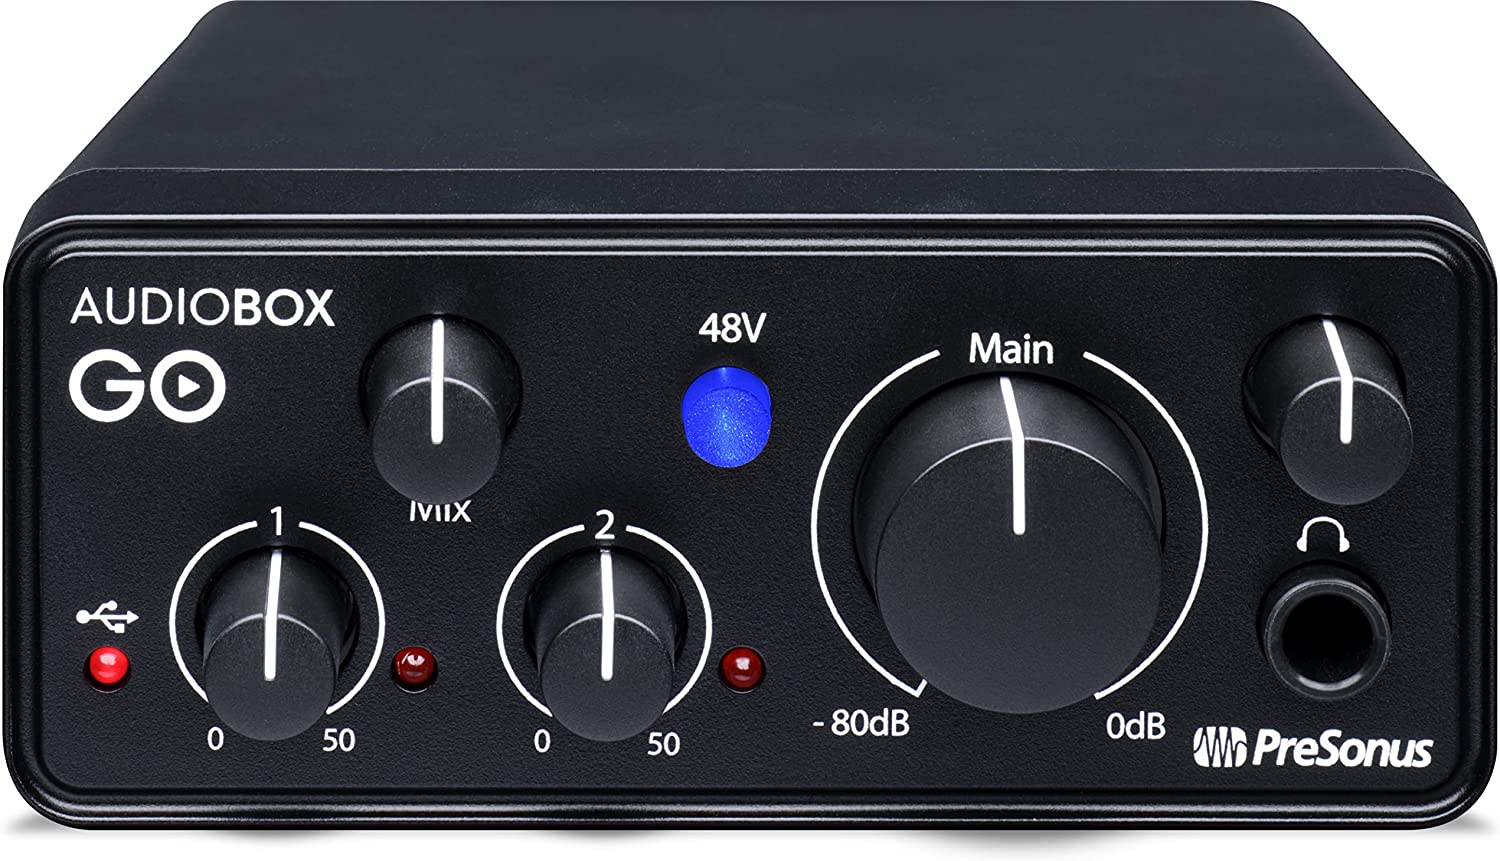 production　Samples　Audio　Recording　Studio　for　GO　Interface　PreSonus　Tutorials,　One　music　Virtual　Software,　Ritz　with　AudioBox　and　Music　Instruments　USB-C　Camera　DAW　Sound